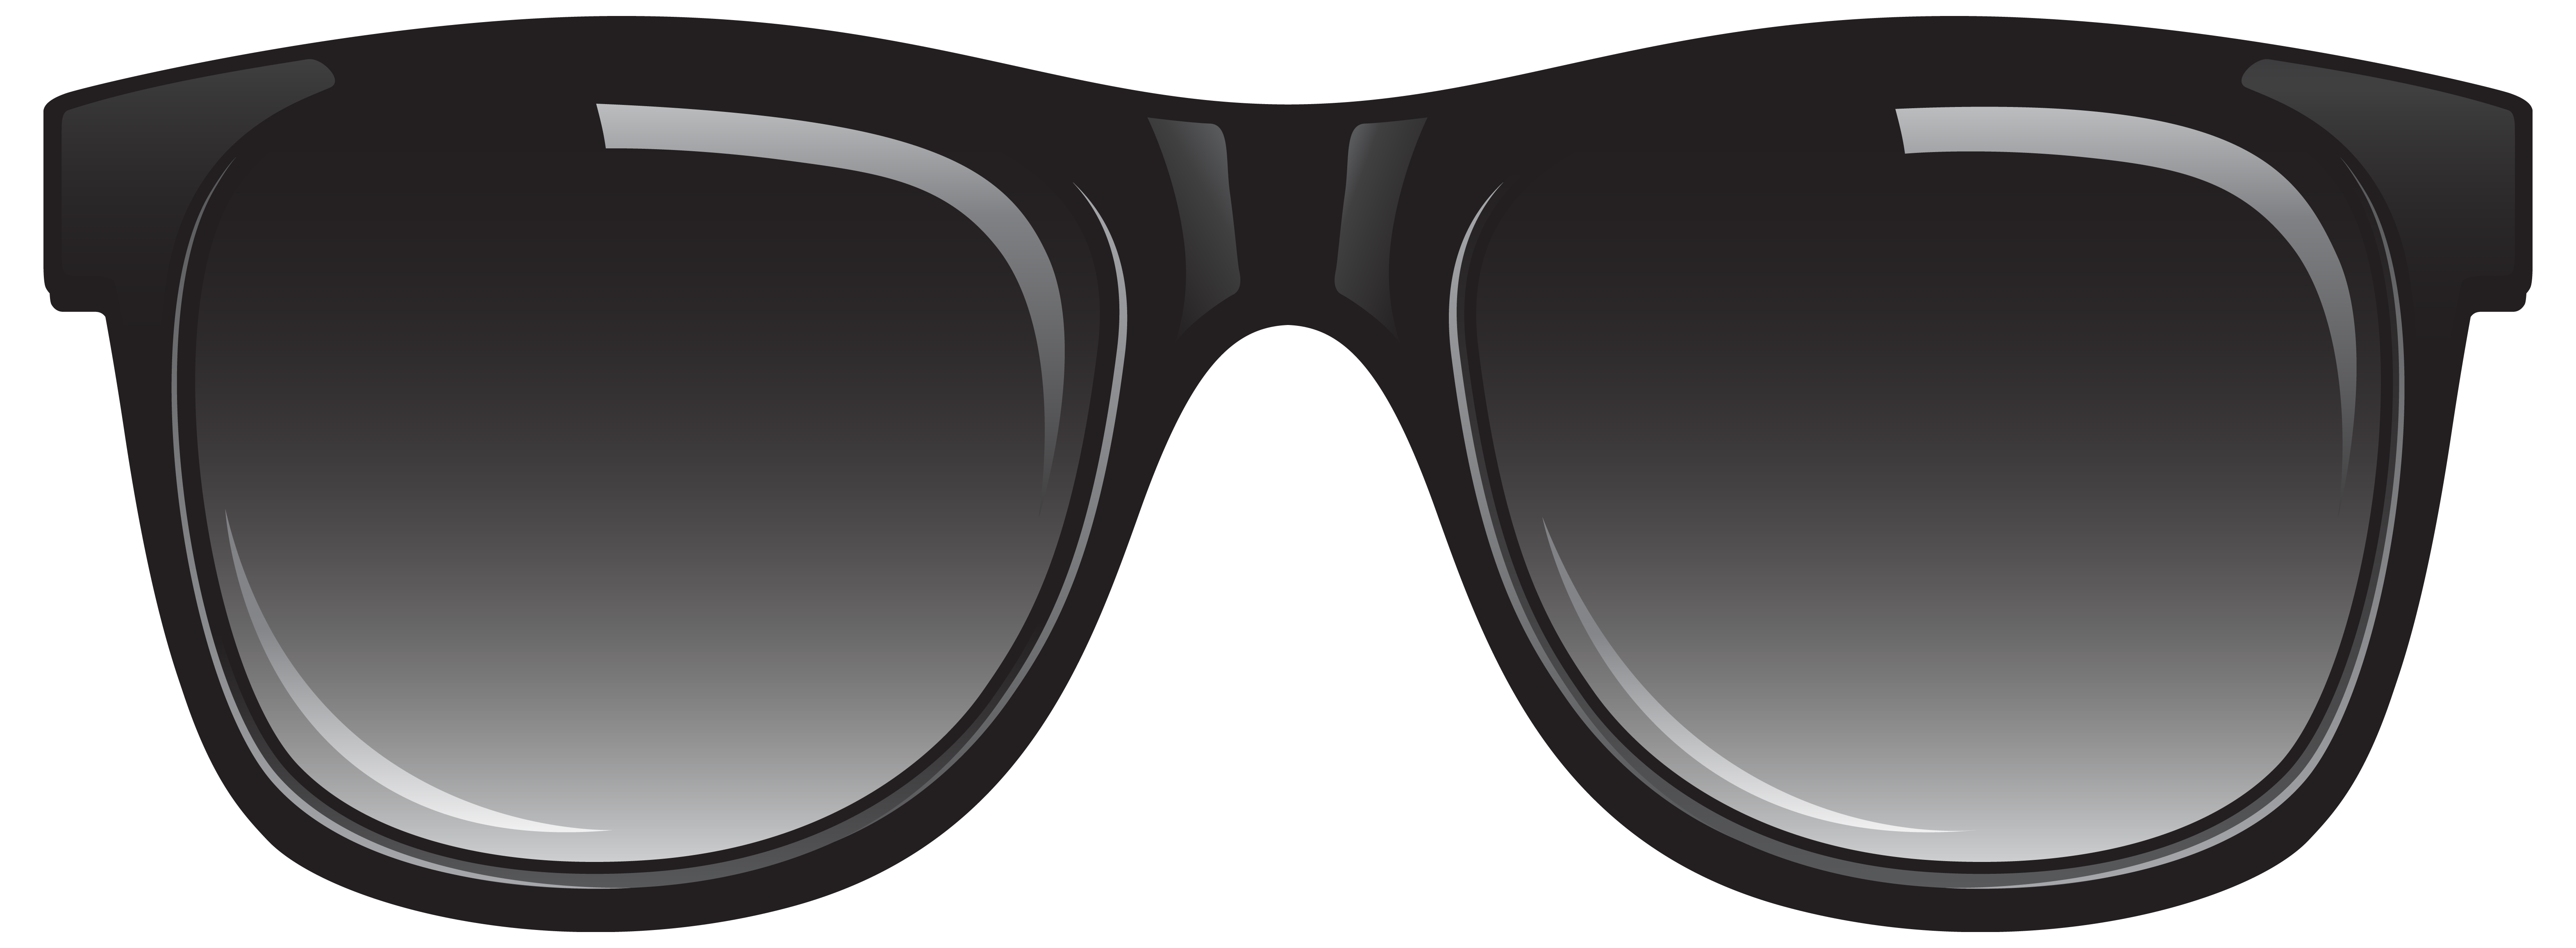 Sunglasses Ray-Ban Black Carrera Wayfarer Aviator Clipart